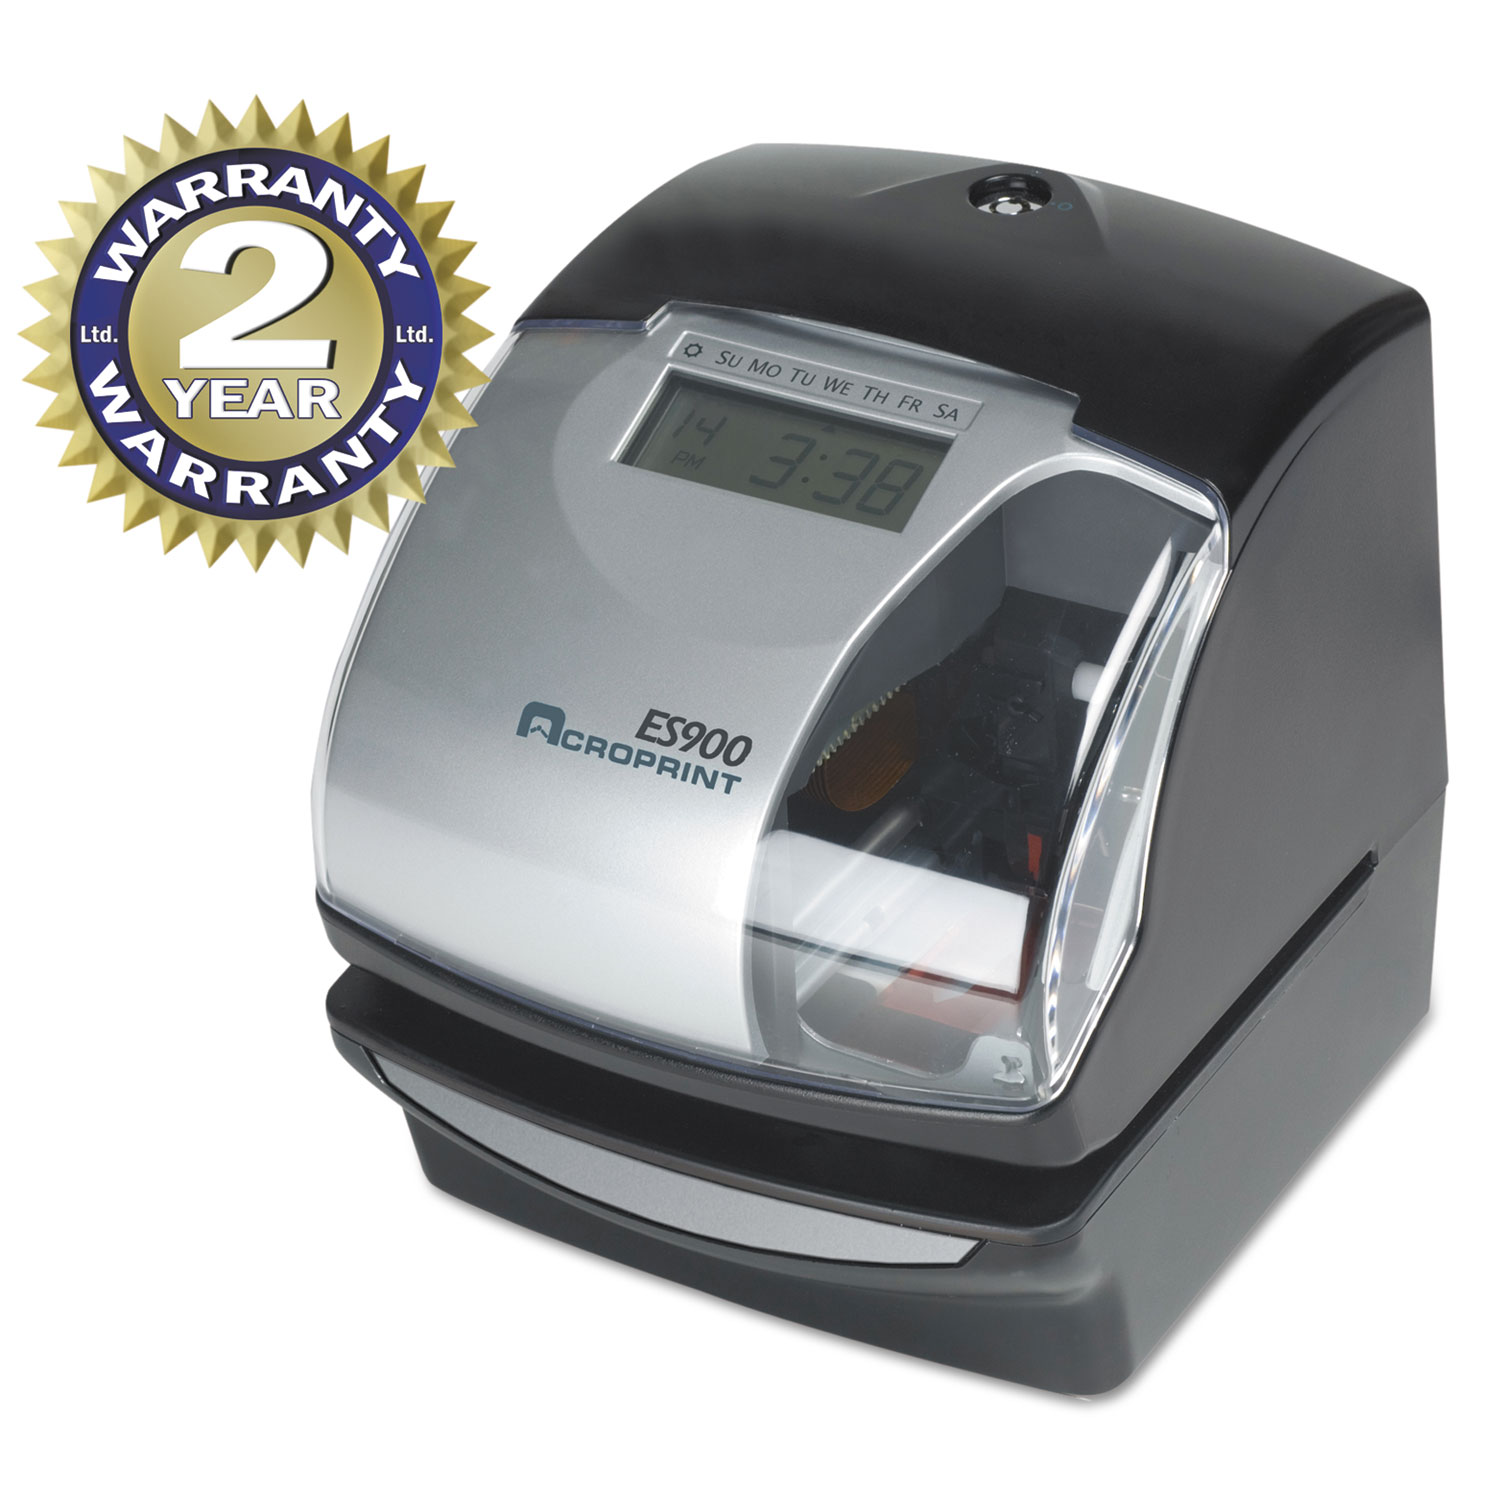  Acroprint 01-0209-000 ES900 Digital Automatic 3-in-1 Machine, Silver and Black (ACP010209000) 